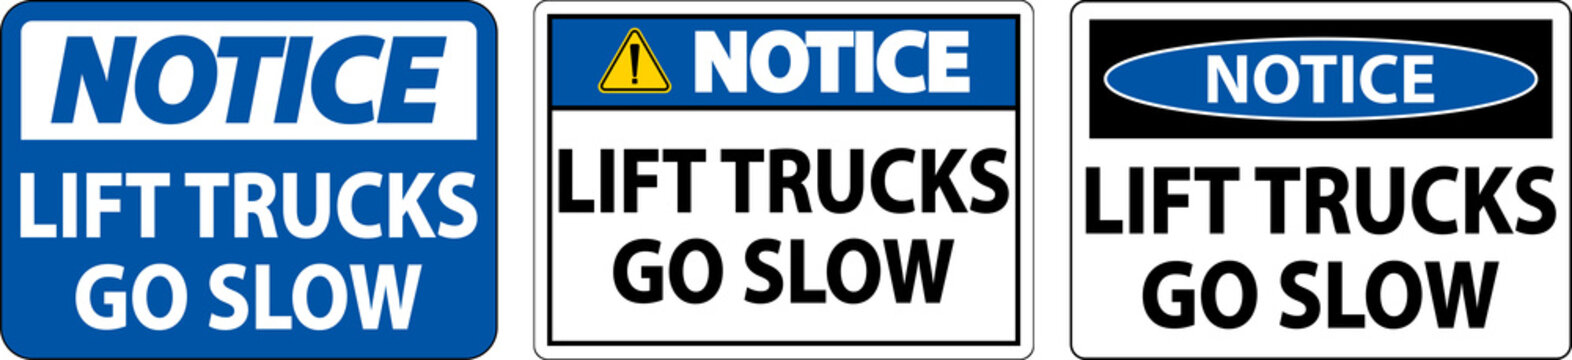 Notice Lift Trucks Go Slow Sign On White Background